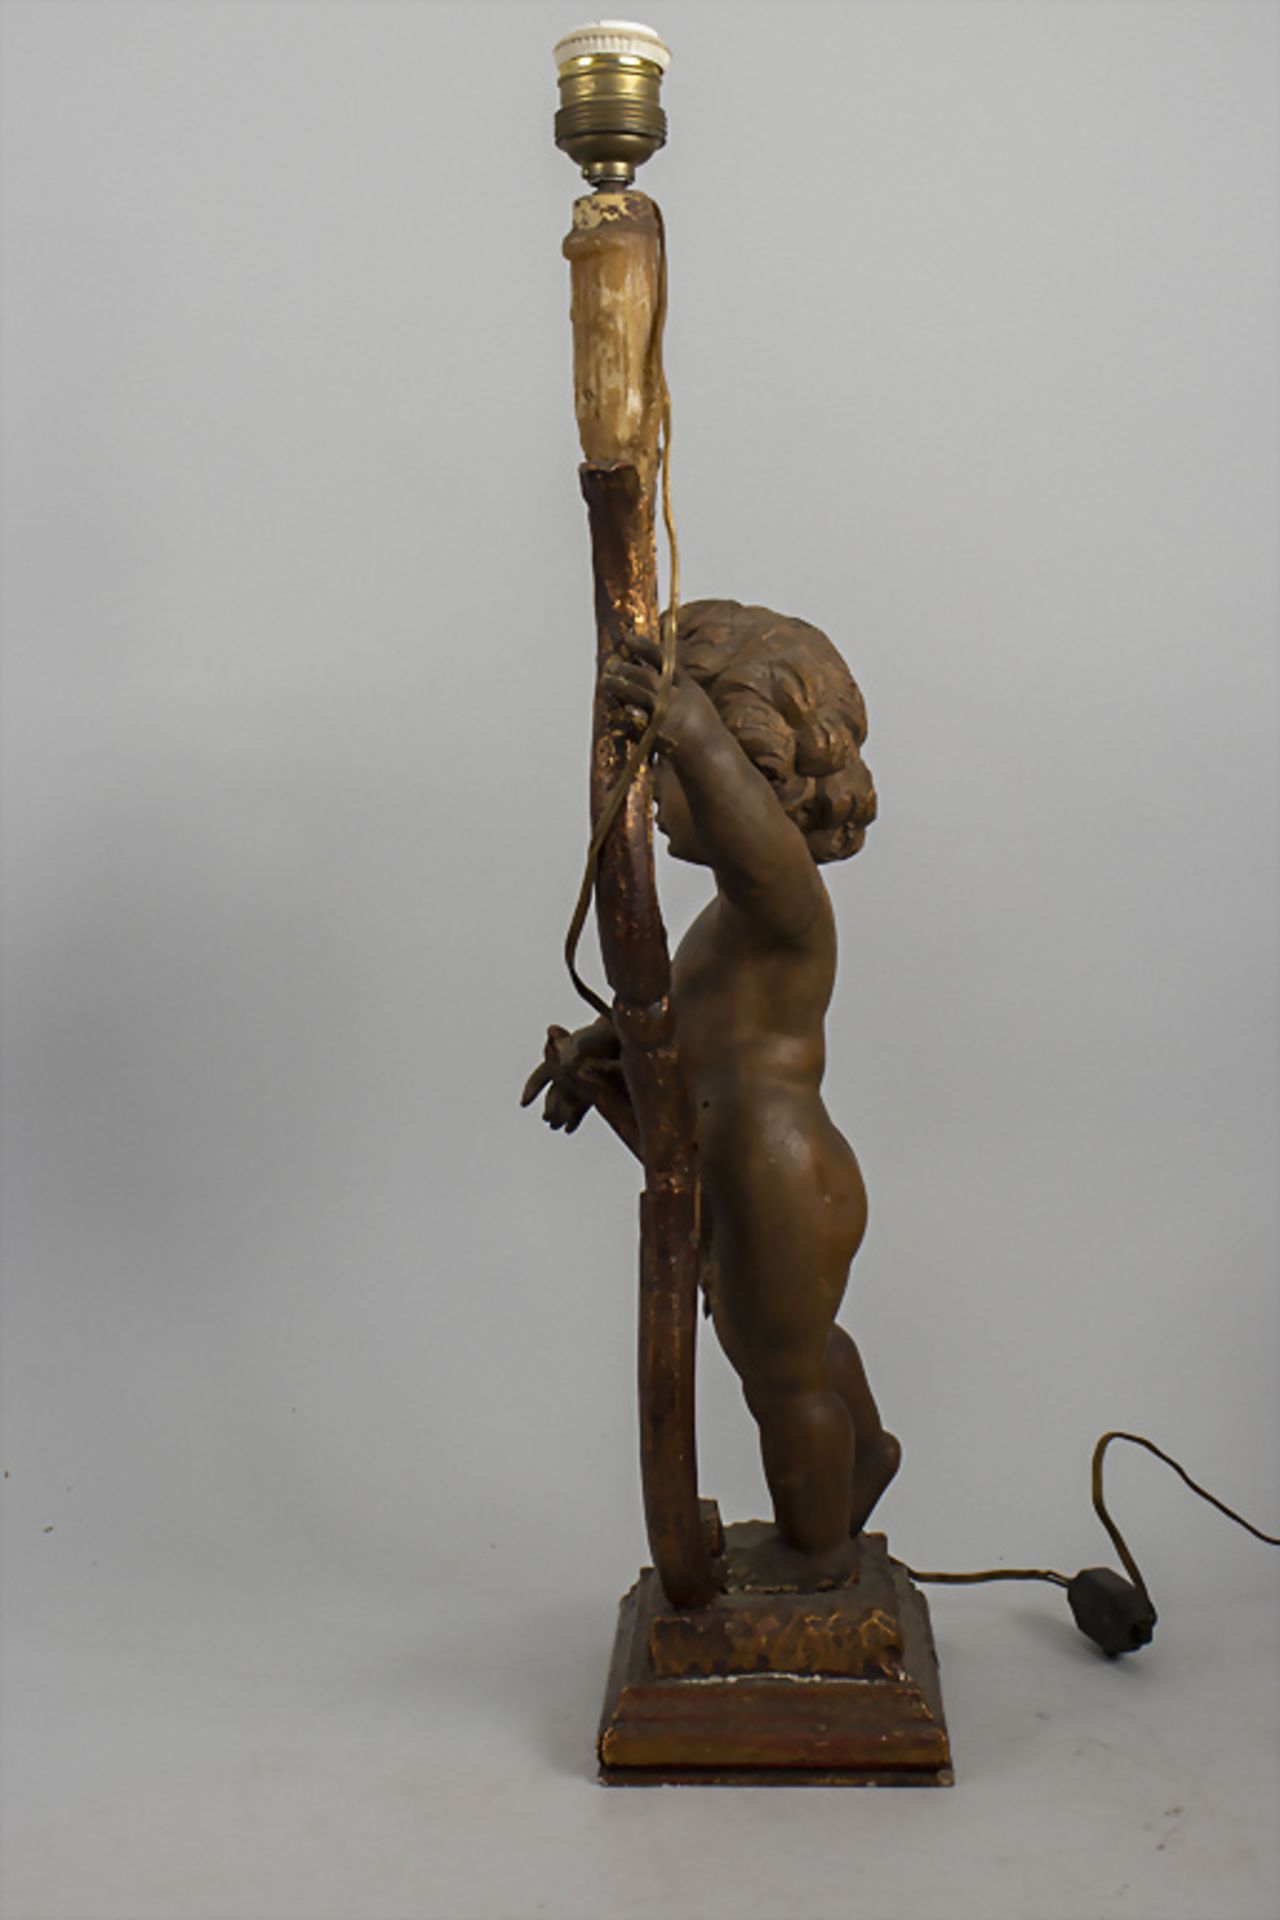 Figurenlampe 'Putto' / A figural lamp 'Cherub' - Image 6 of 9